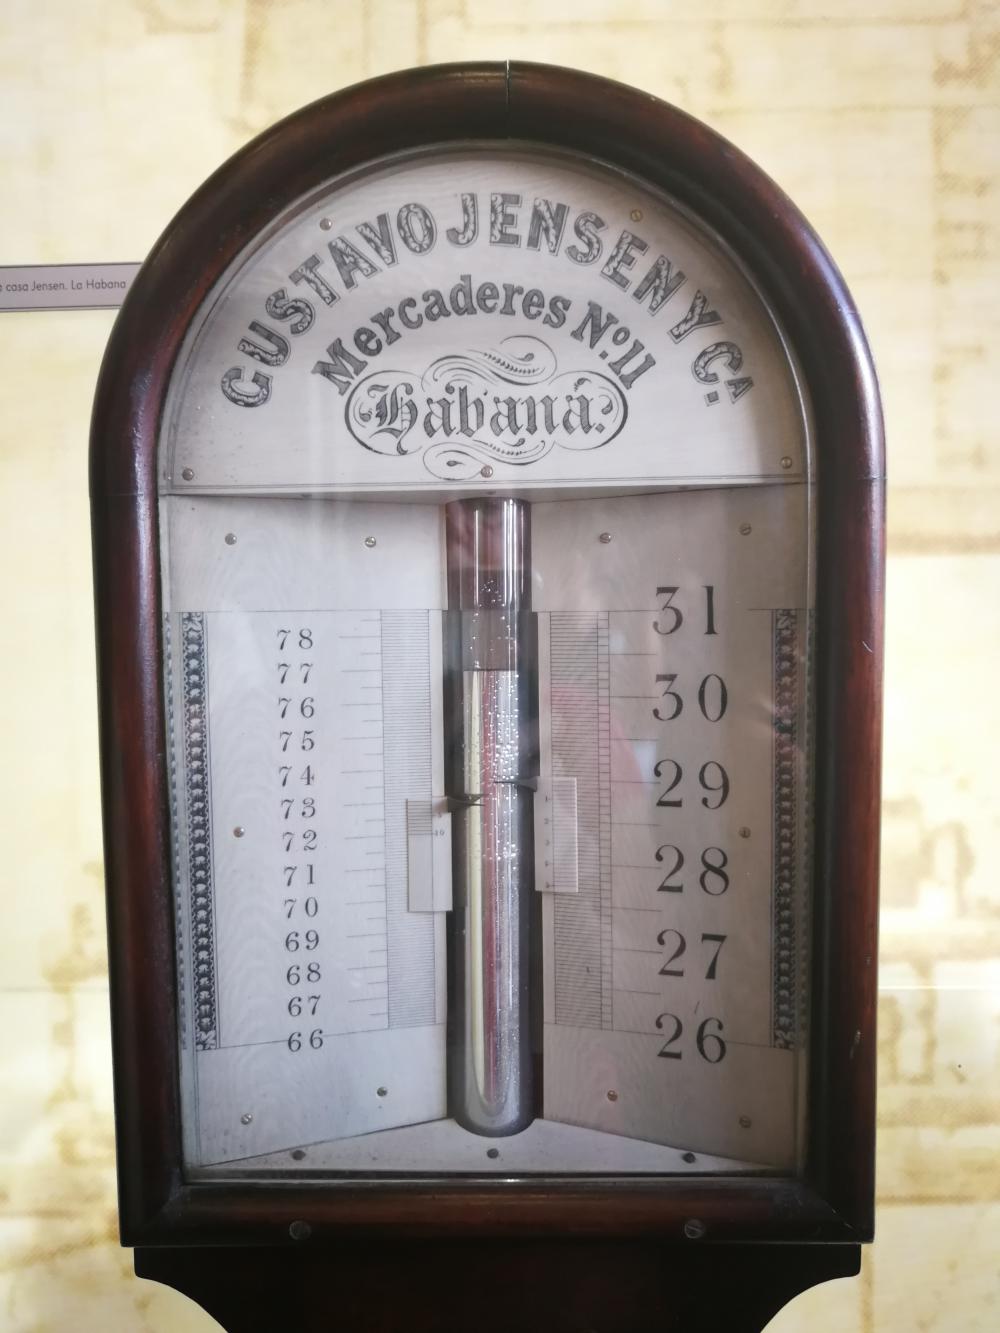 Barometer, Gustavo Jensen y Ca., Habana, Observato